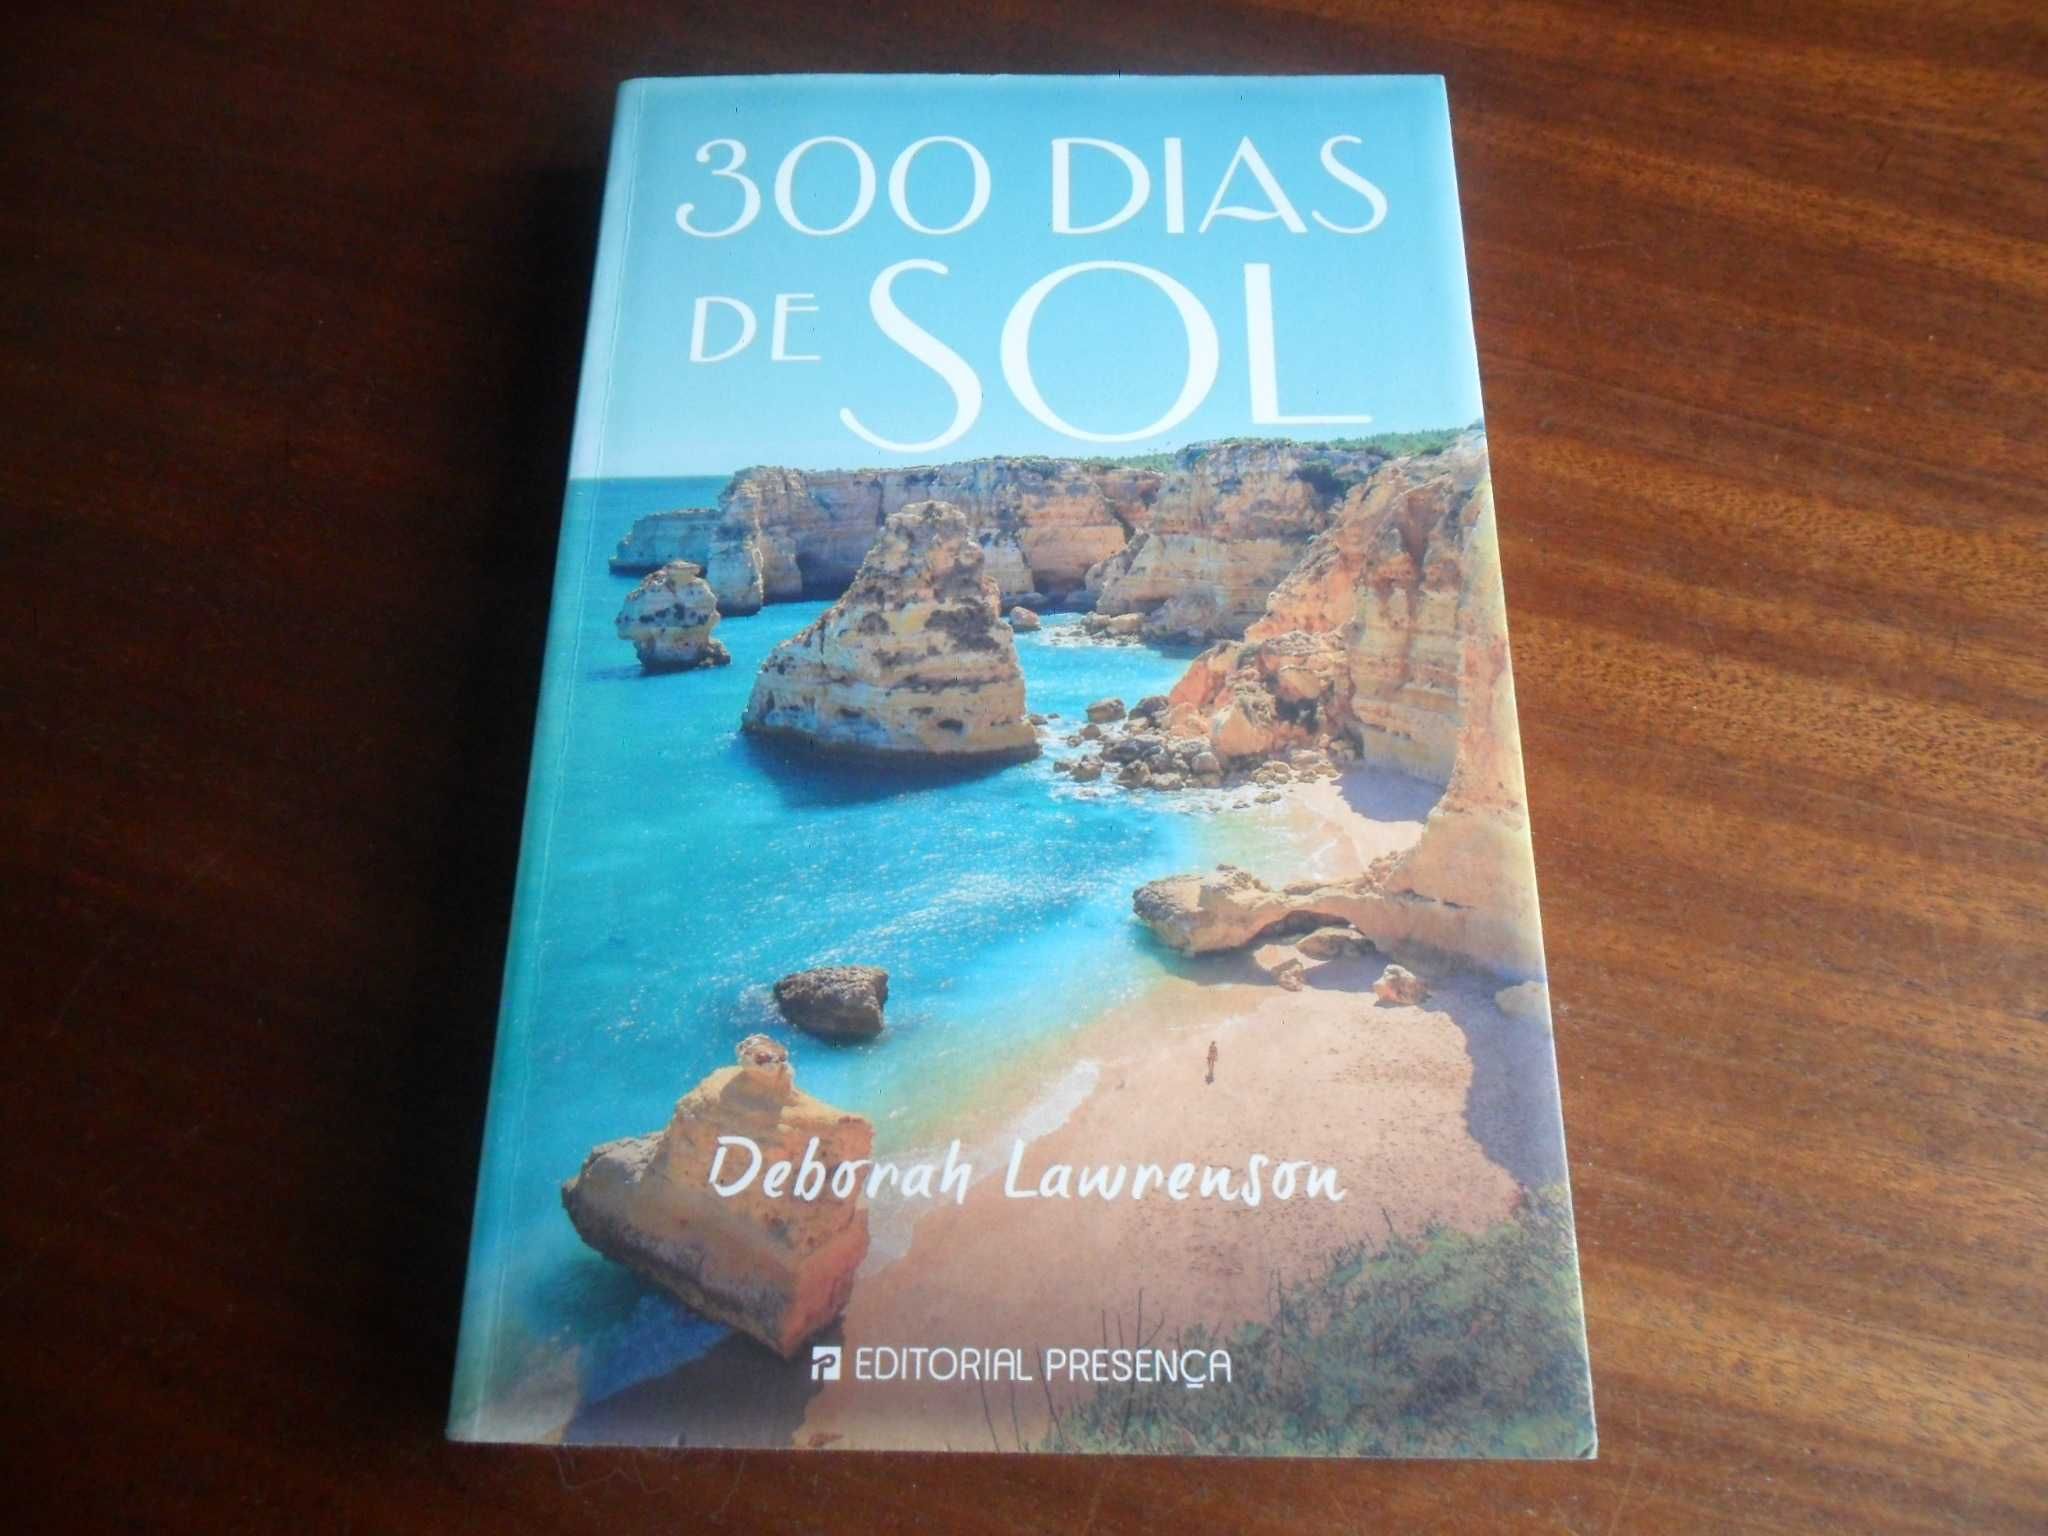 "300 Dias de Sol" de Deborah Lawrenson - 1ª Edição de 2016